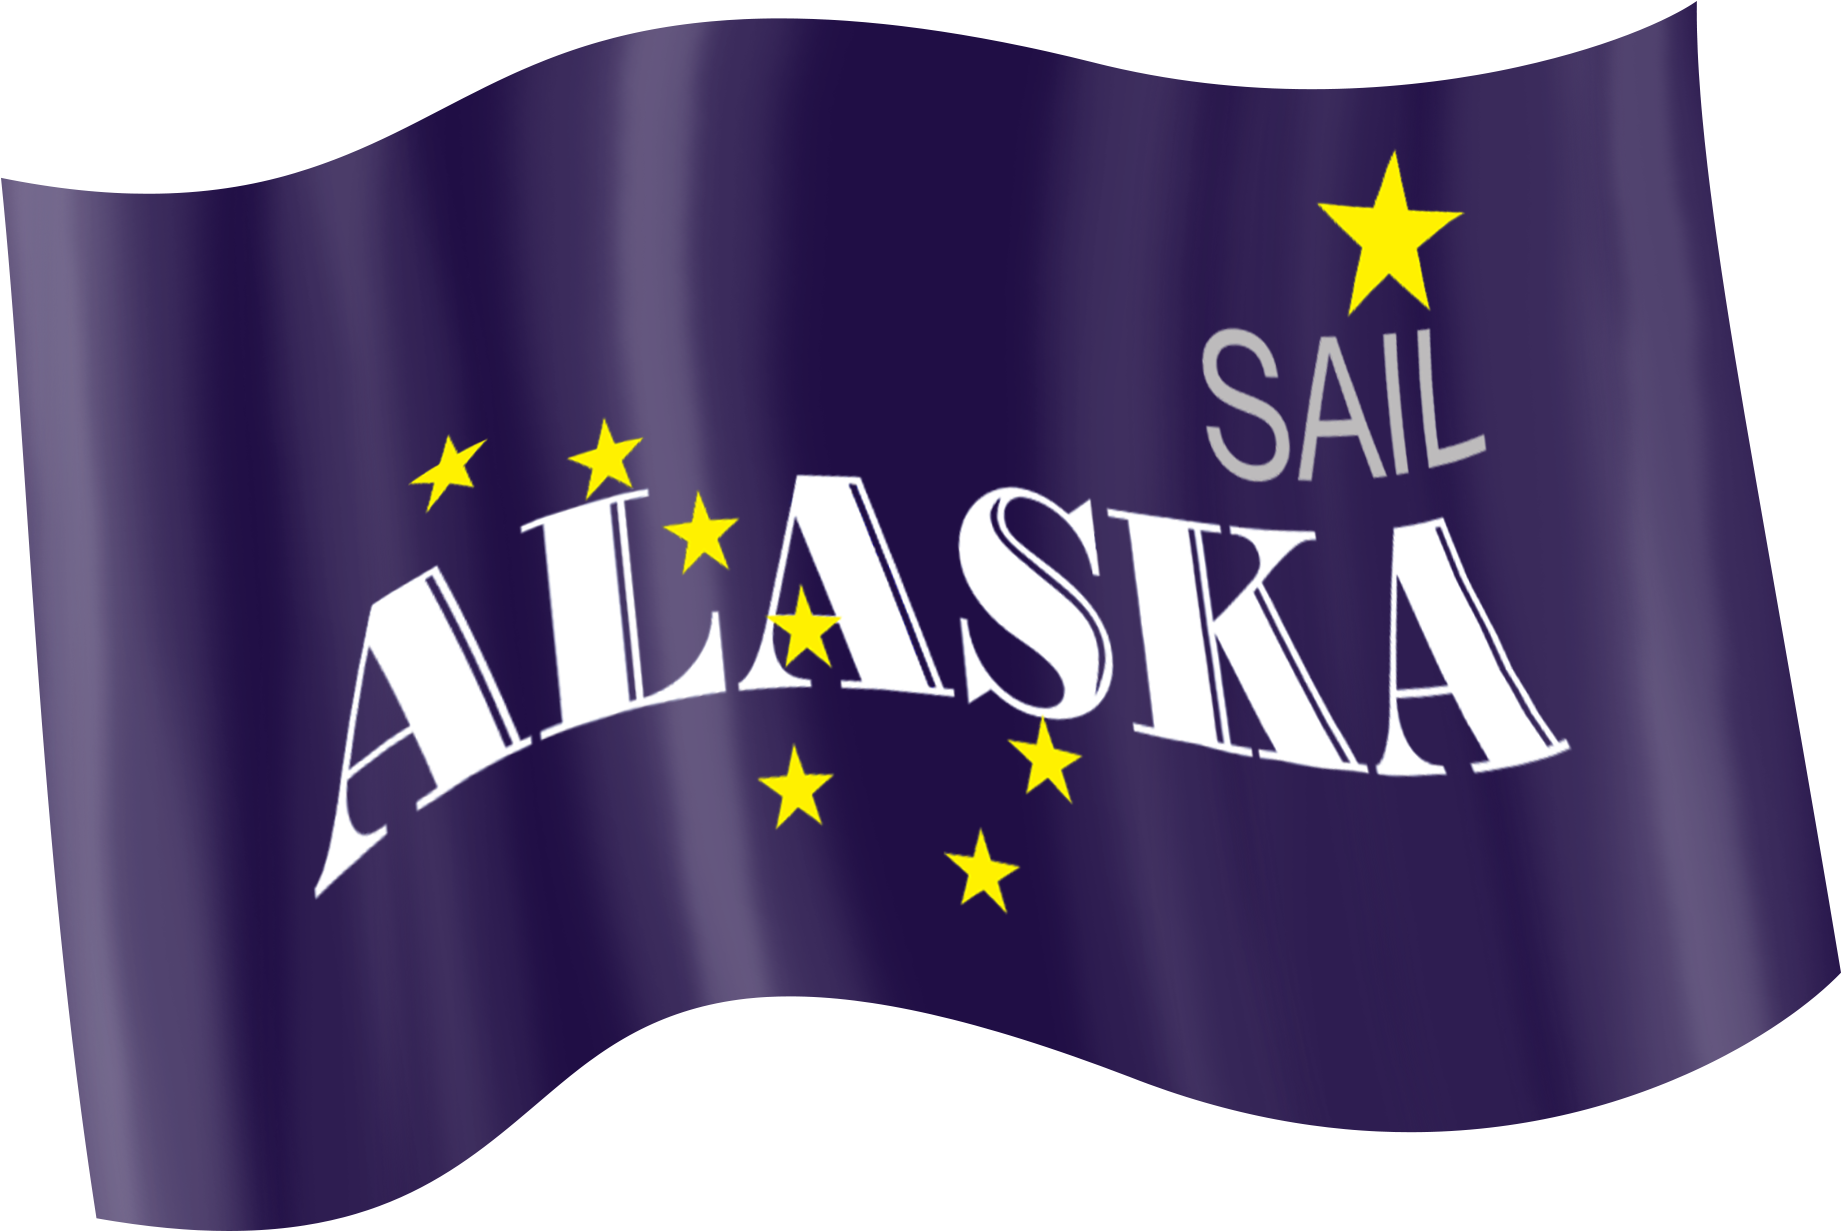 Sail Alaska Promotional Flag PNG